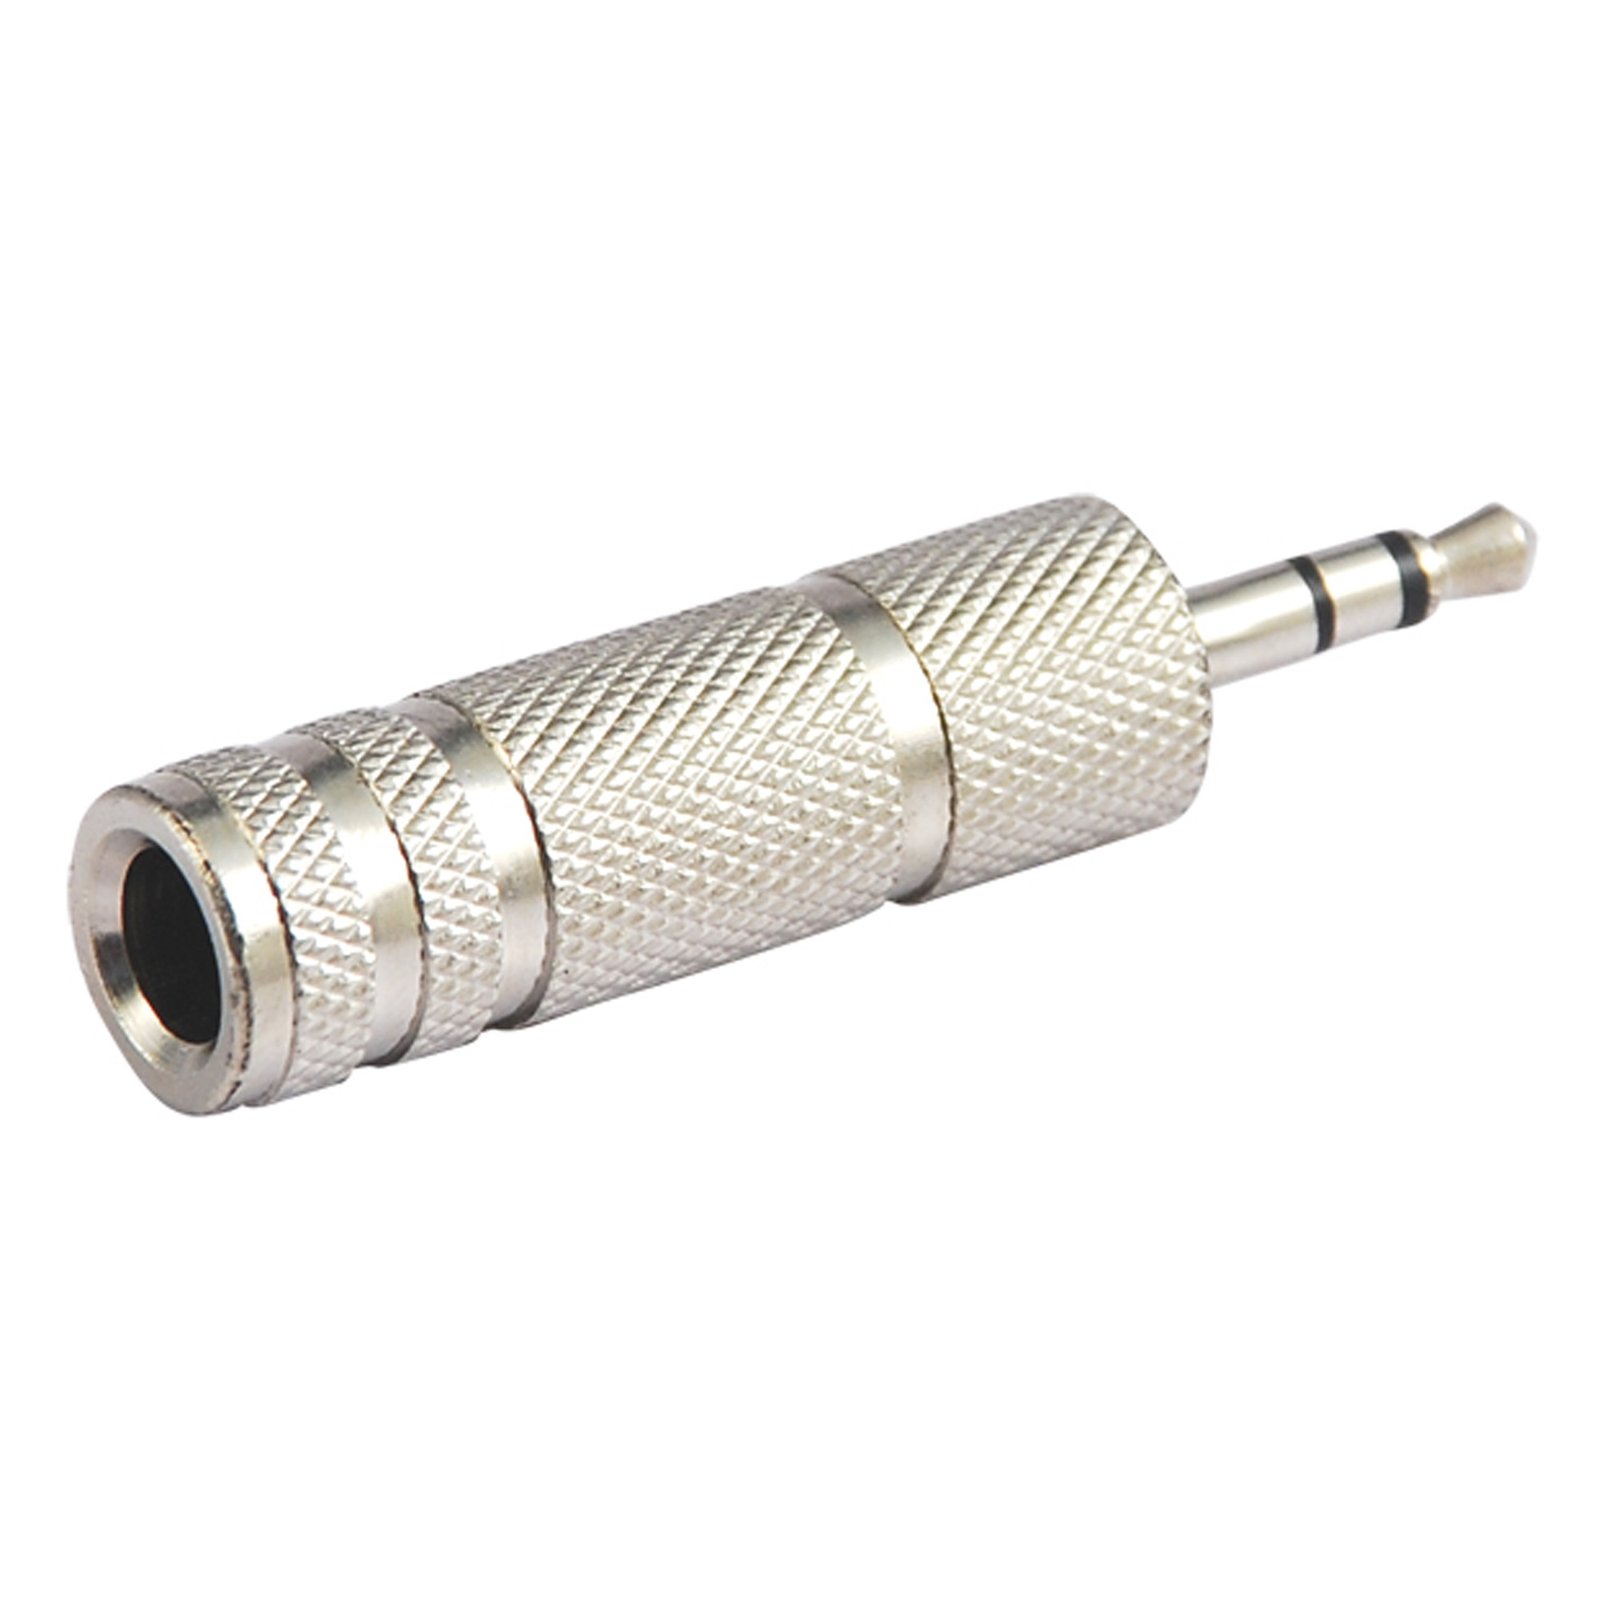 Jack/Plug Adaptadores : Adaptador 6.3mm plug st / 3.5mm jack st